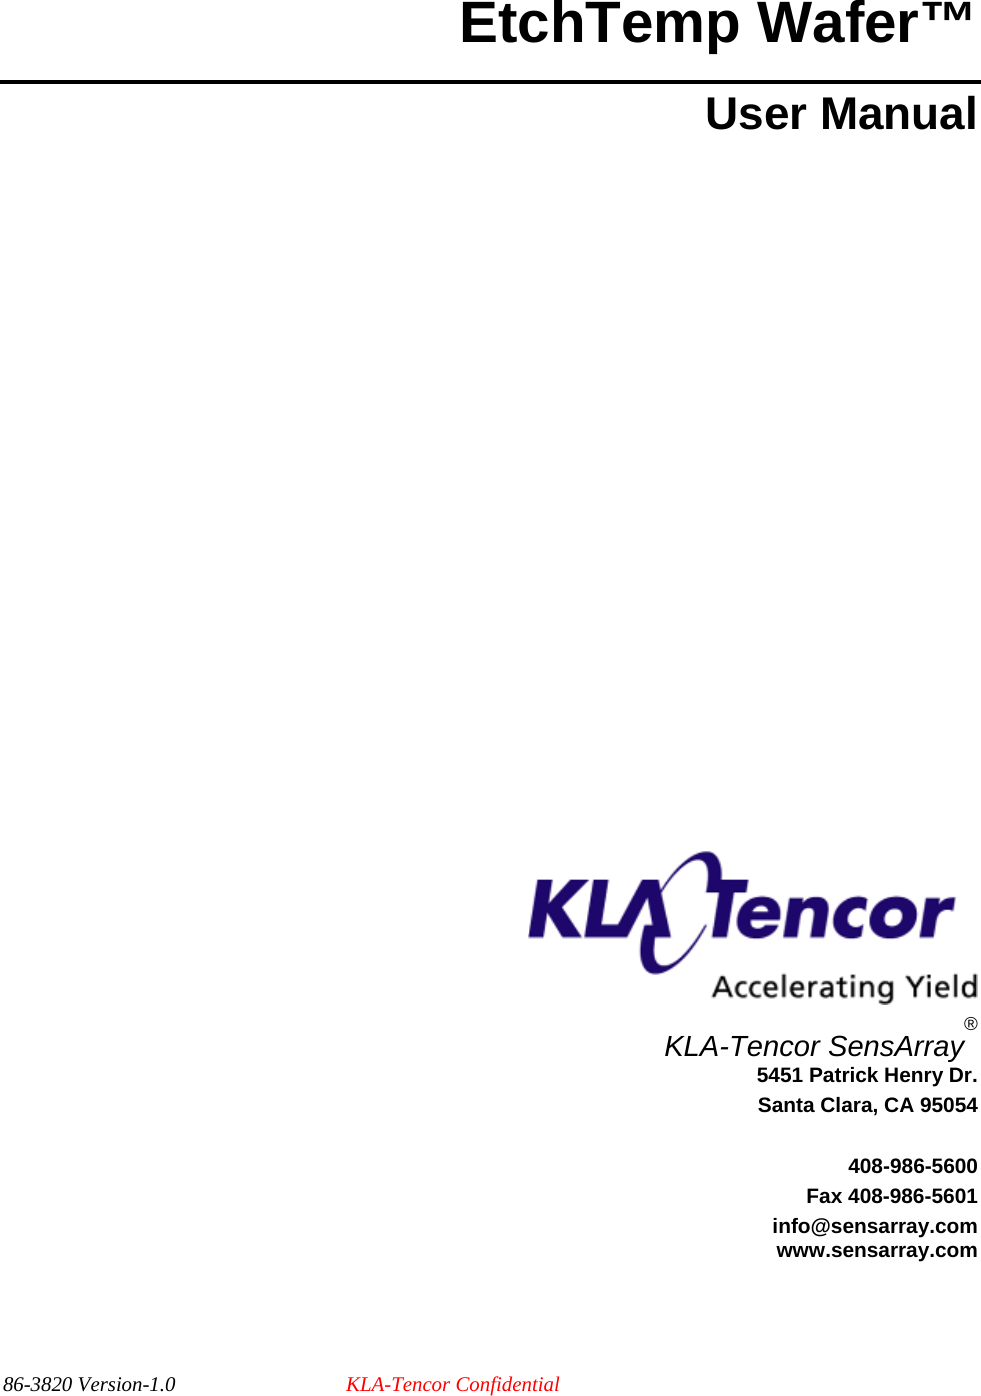 EtchTemp Wafer™ User Manual                KLA-Tencor SensArray® 5451 Patrick Henry Dr. Santa Clara, CA 95054  408-986-5600 Fax 408-986-5601 info@sensarray.com www.sensarray.com 86-3820 Version-1.0  KLA-Tencor Confidential 